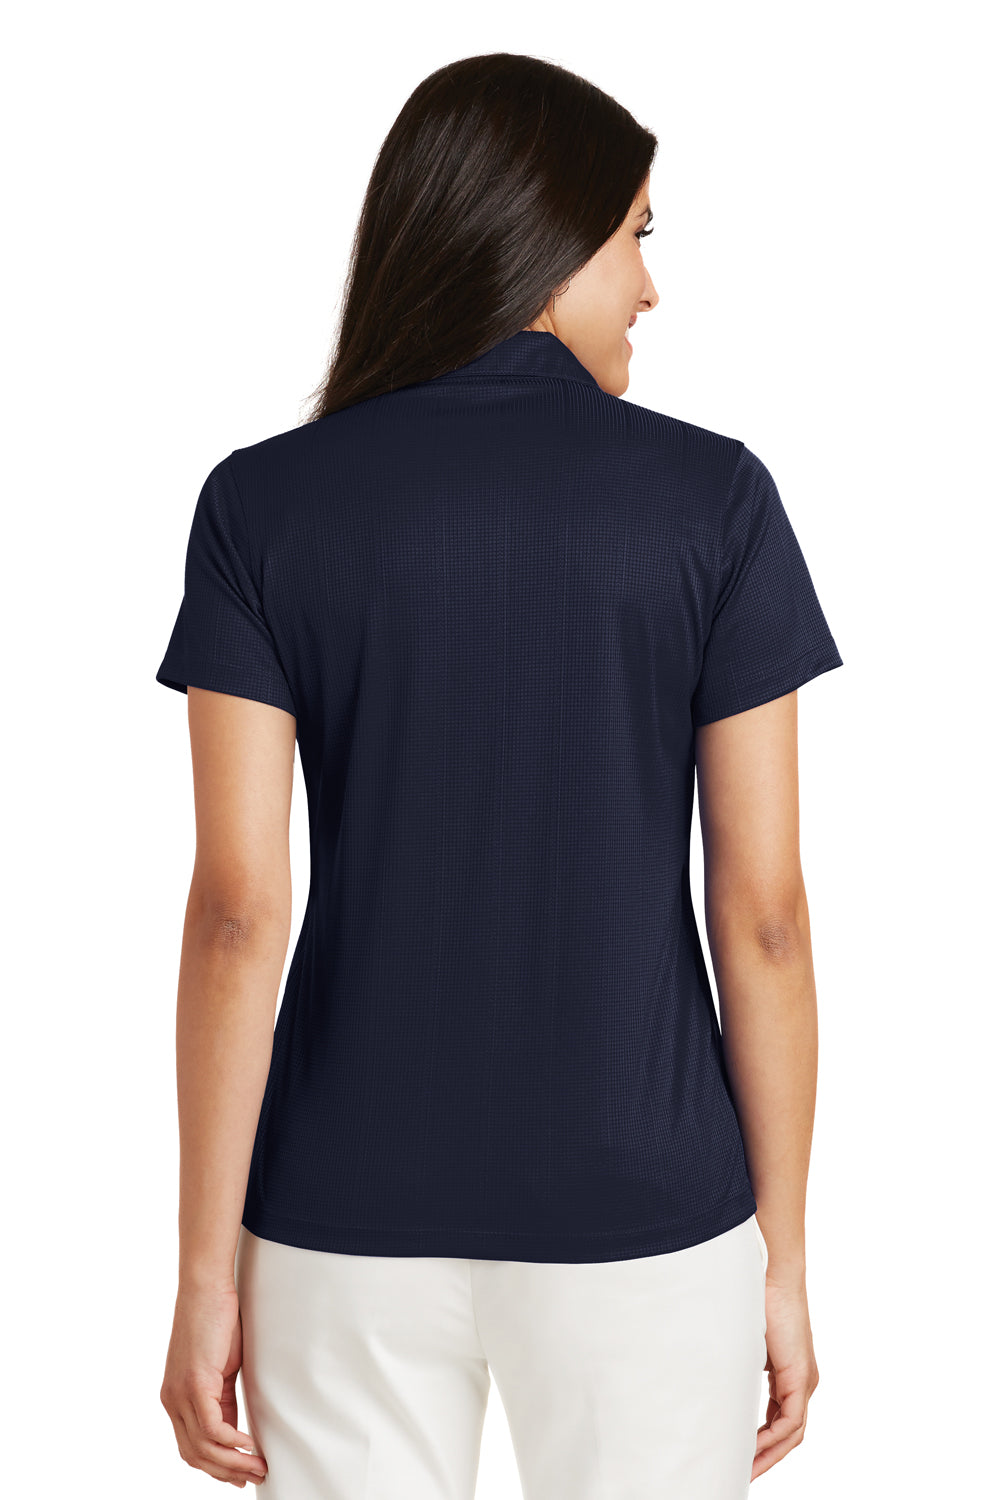 Port Authority L528 Womens Performance Moisture Wicking Short Sleeve Polo Shirt Navy Blue Back